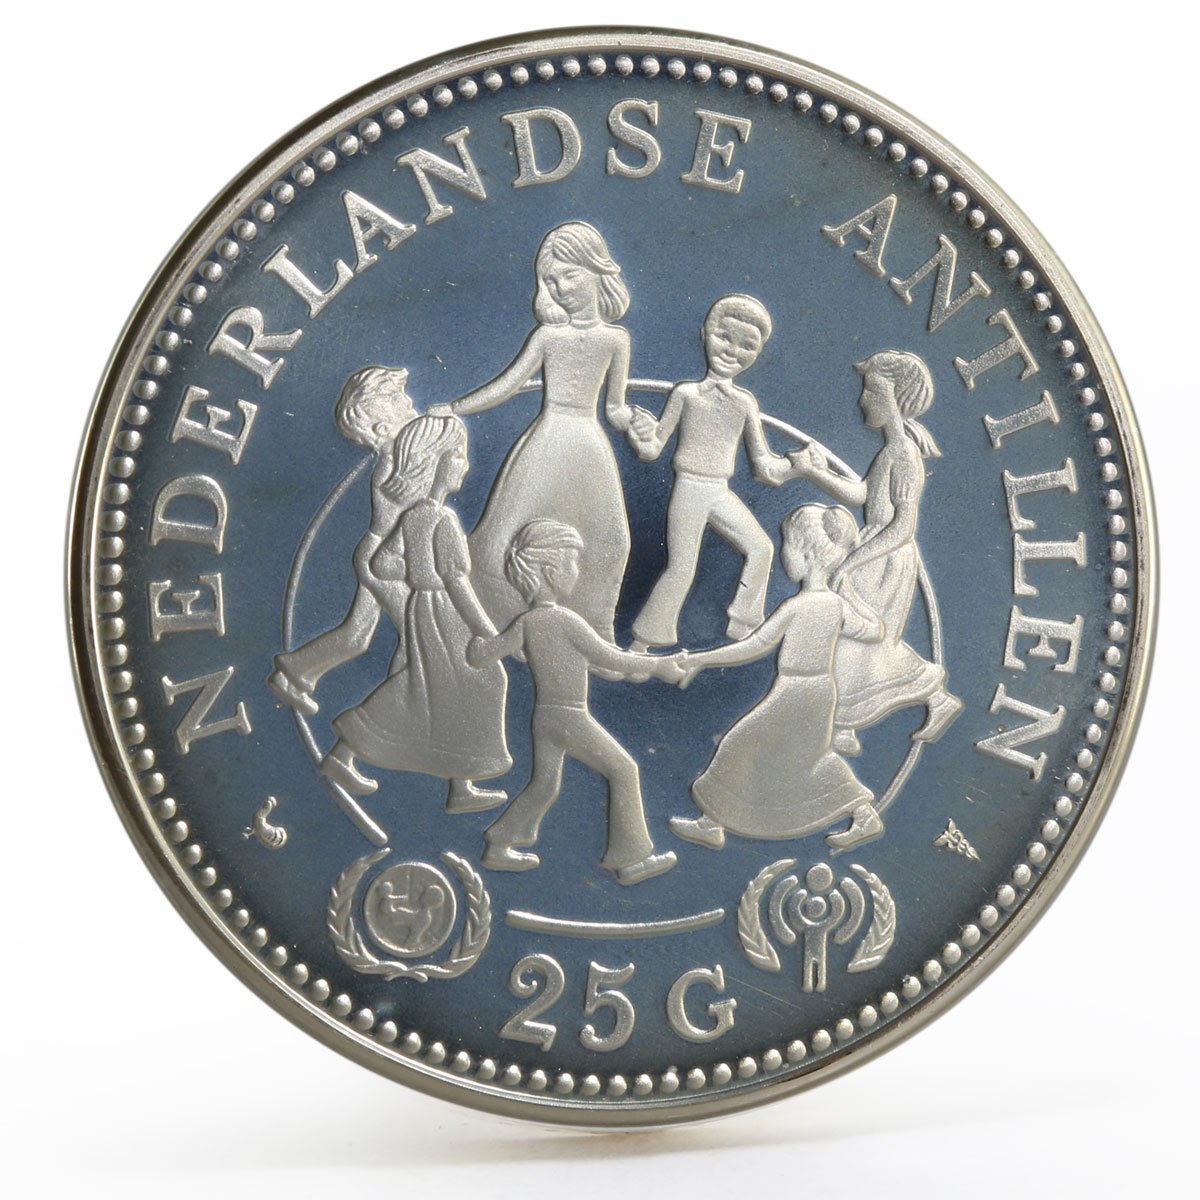 Netherlands Antilles 25 gulden International Year of the Child silver coin 1979